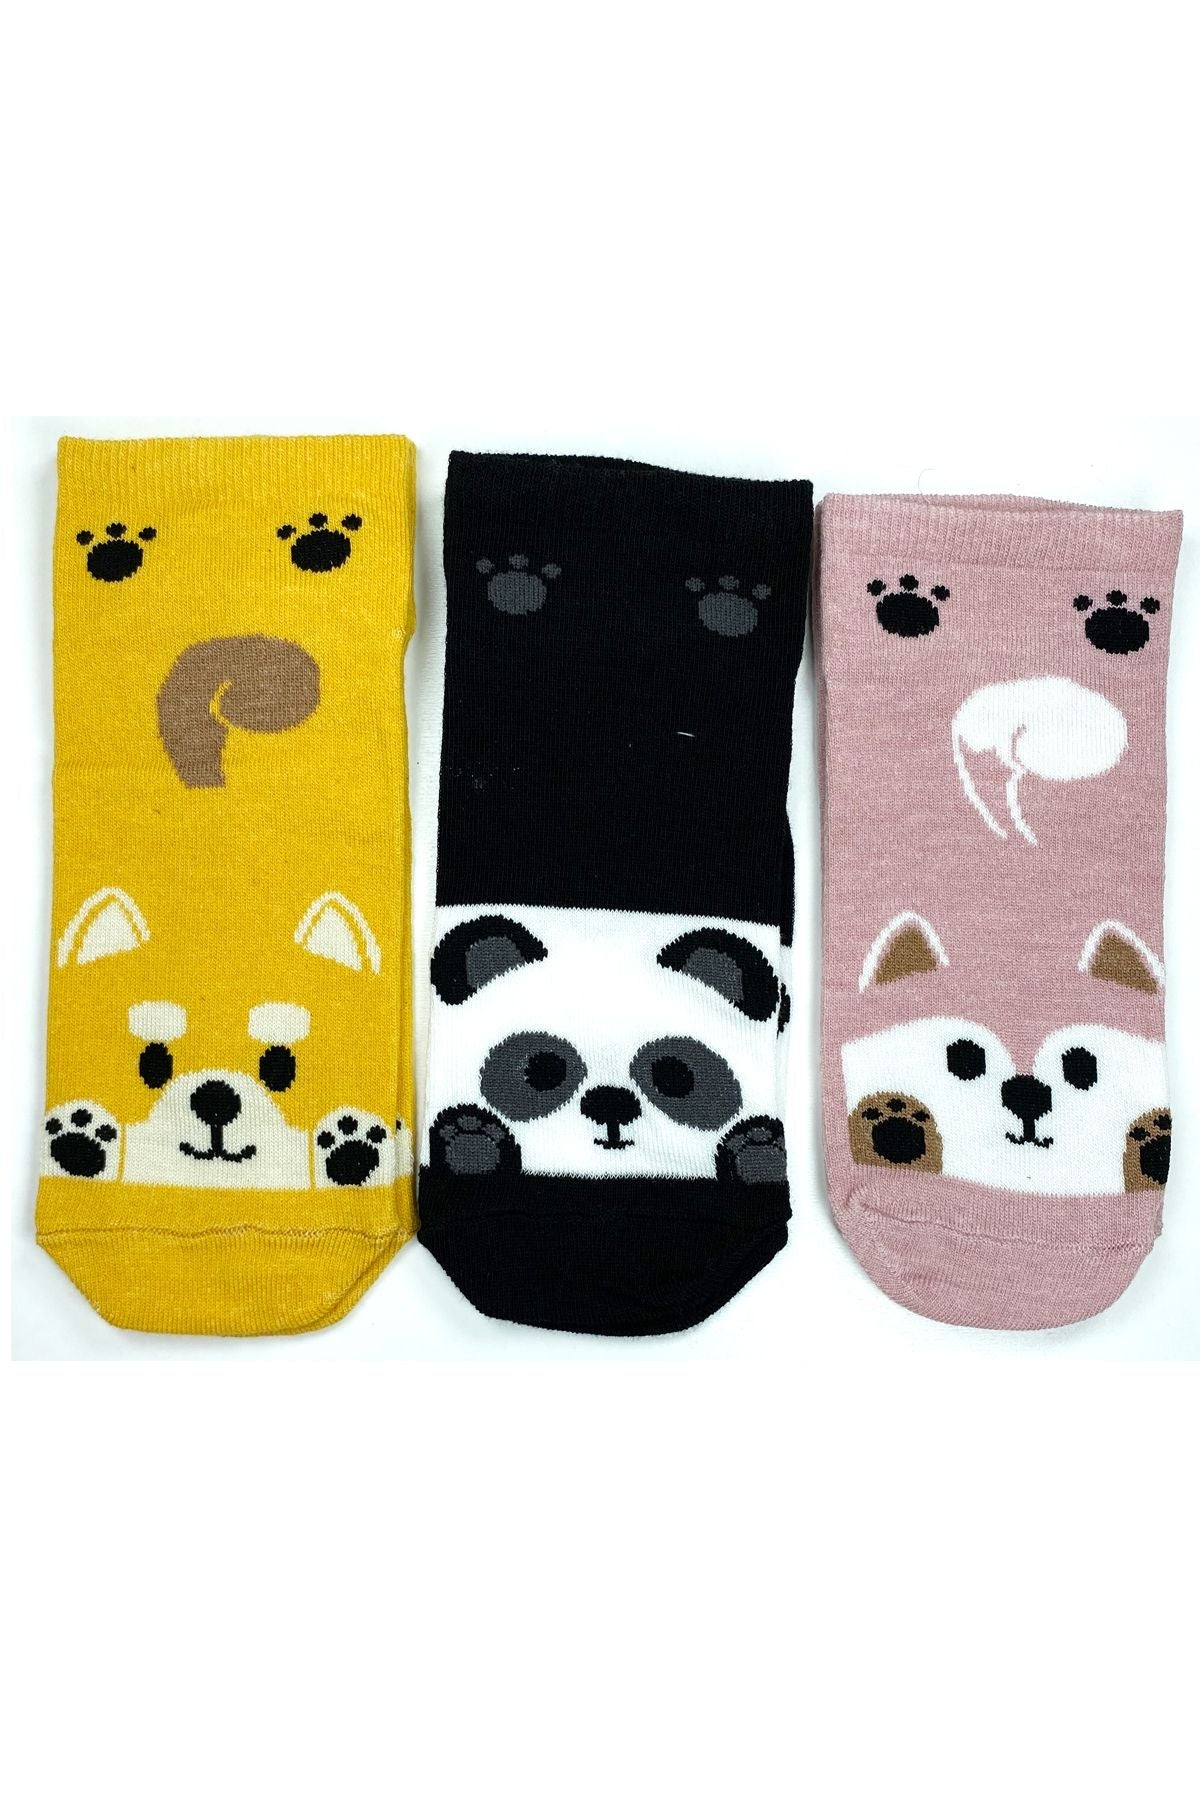 3 Pairs Cute Animal Printed Cotton Women Wrist Socks